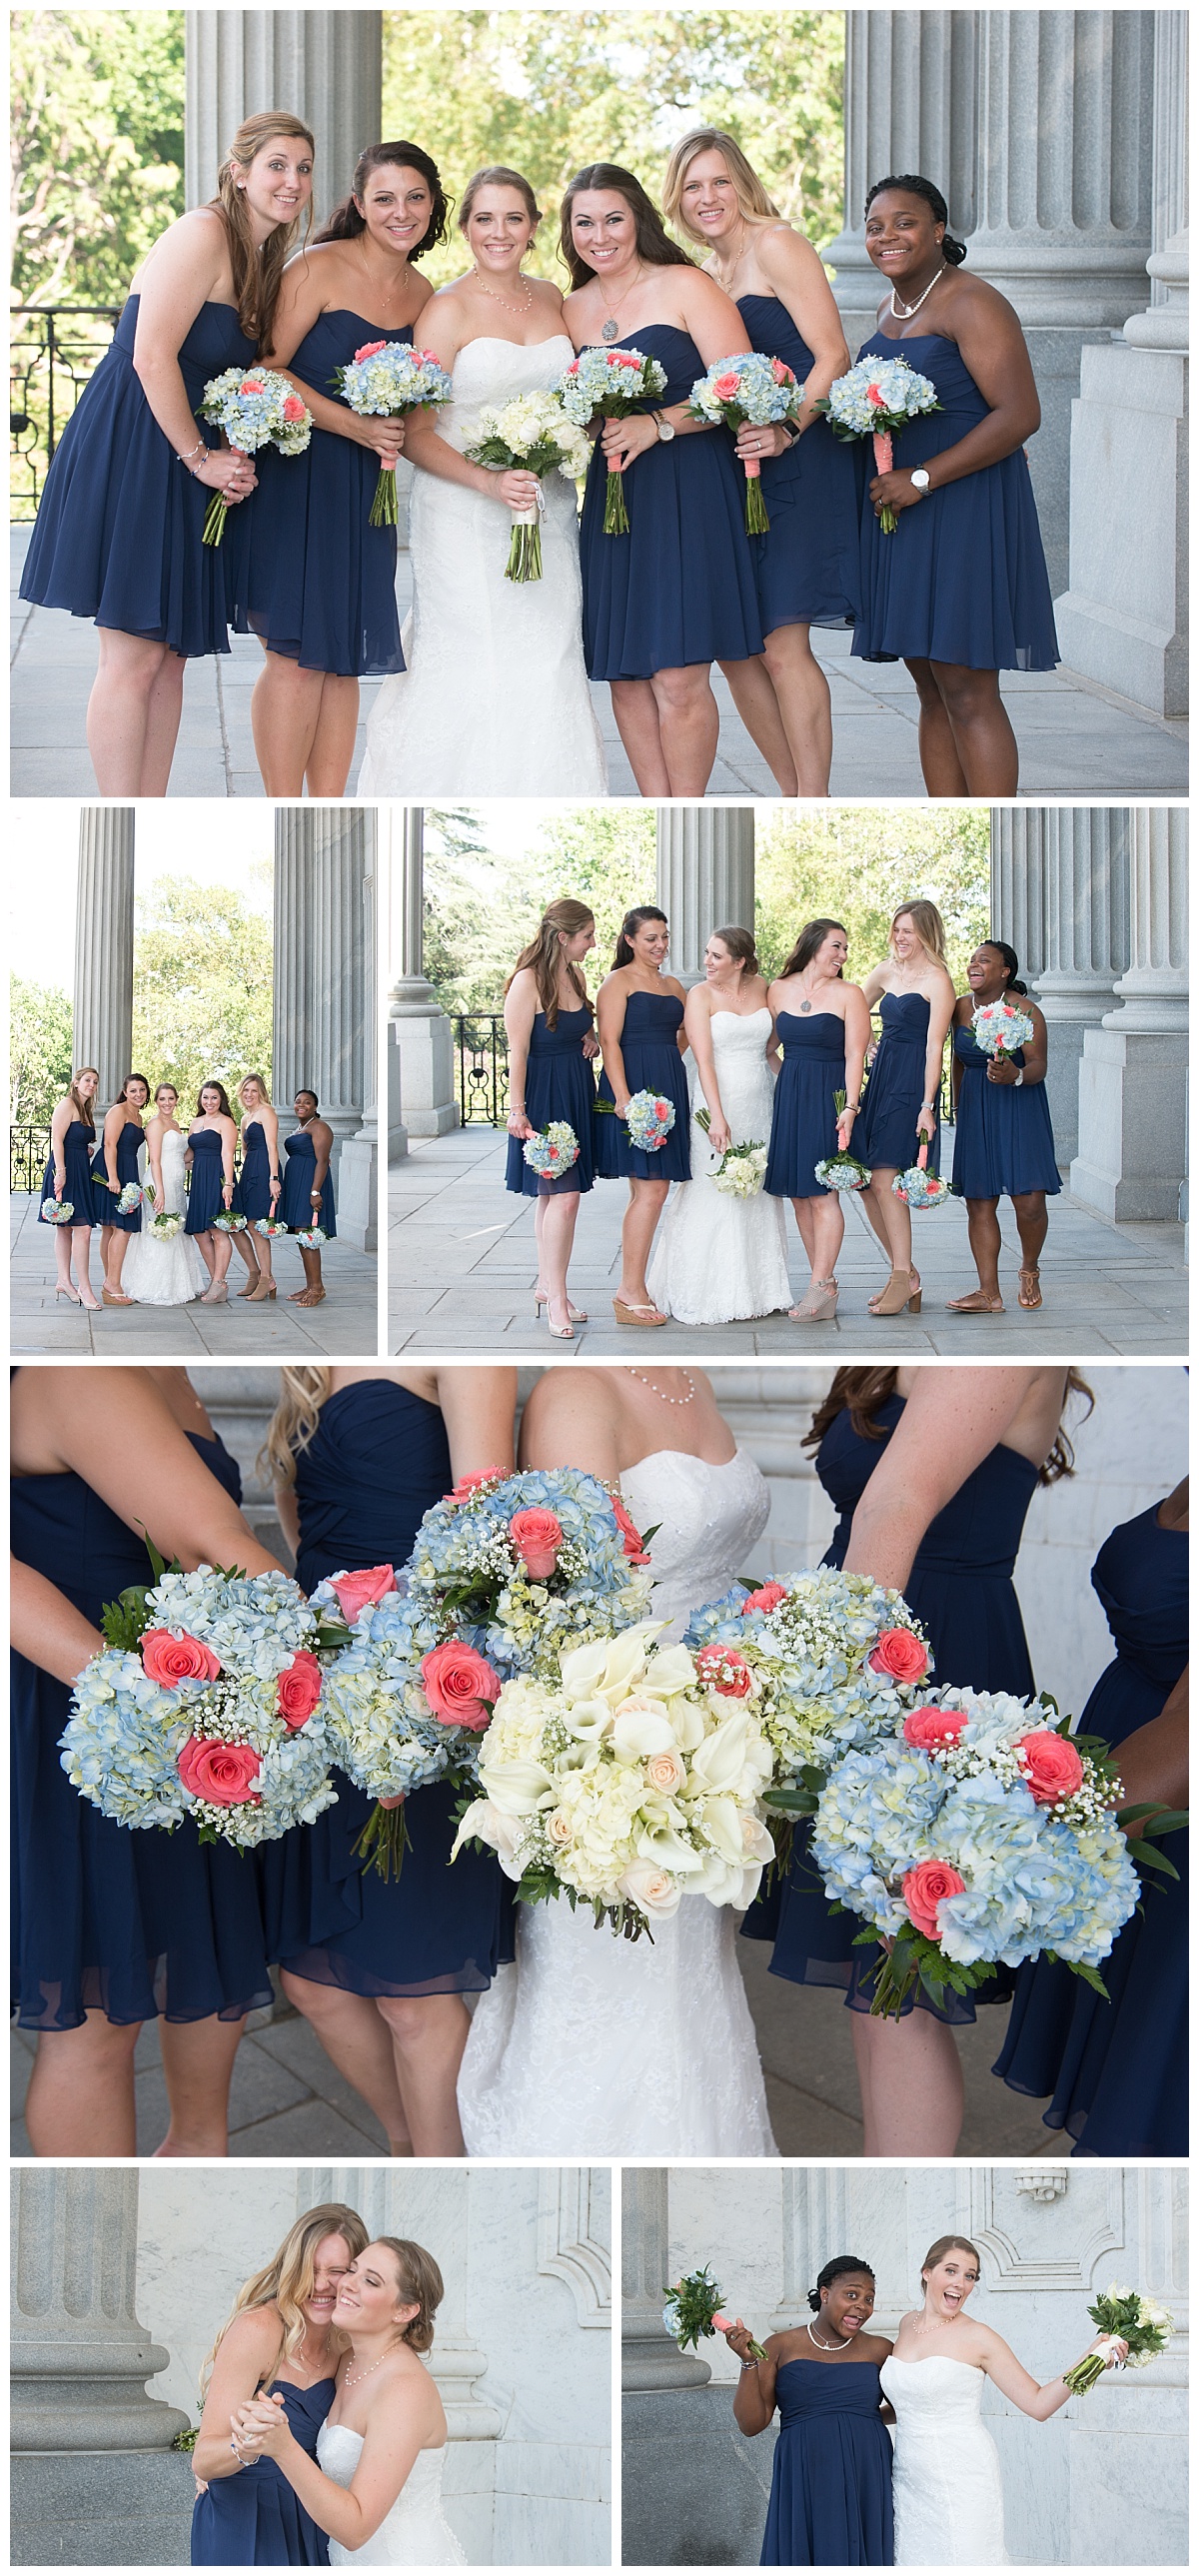 Bridesmaids in navy summer dresses